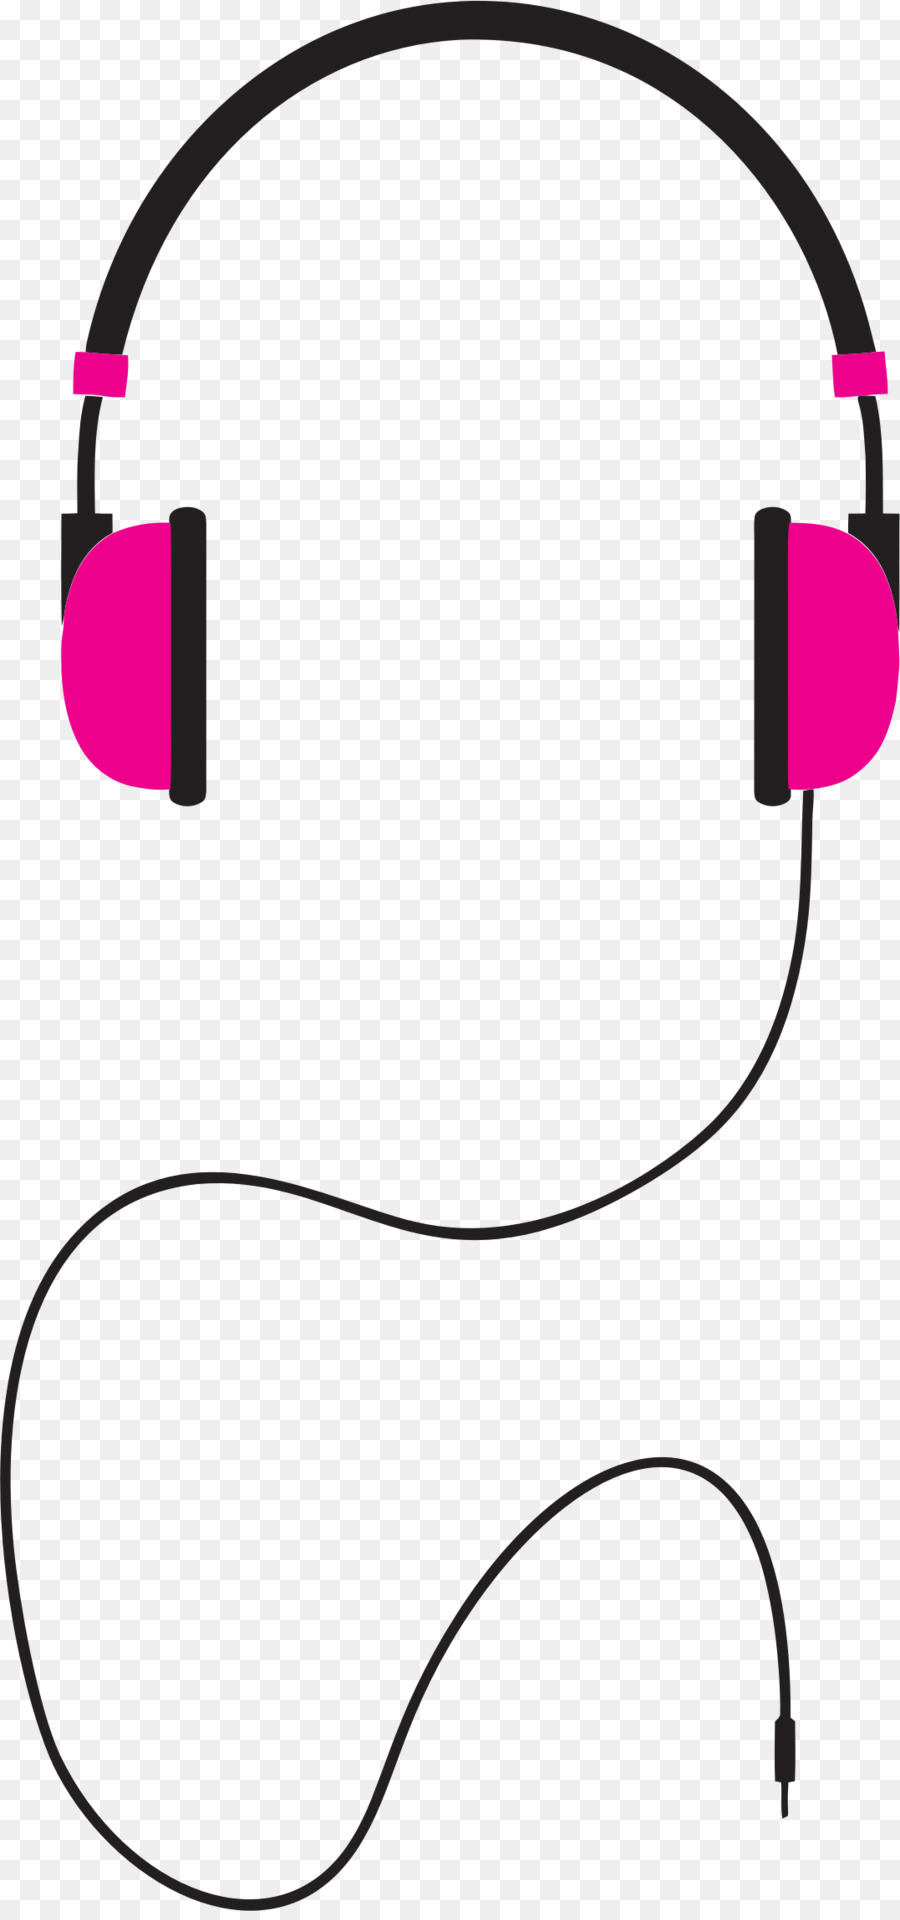 Headphones Computer Icons Clip art - headphone png download - 1077*2287 - Free Transparent Headphones png Download.